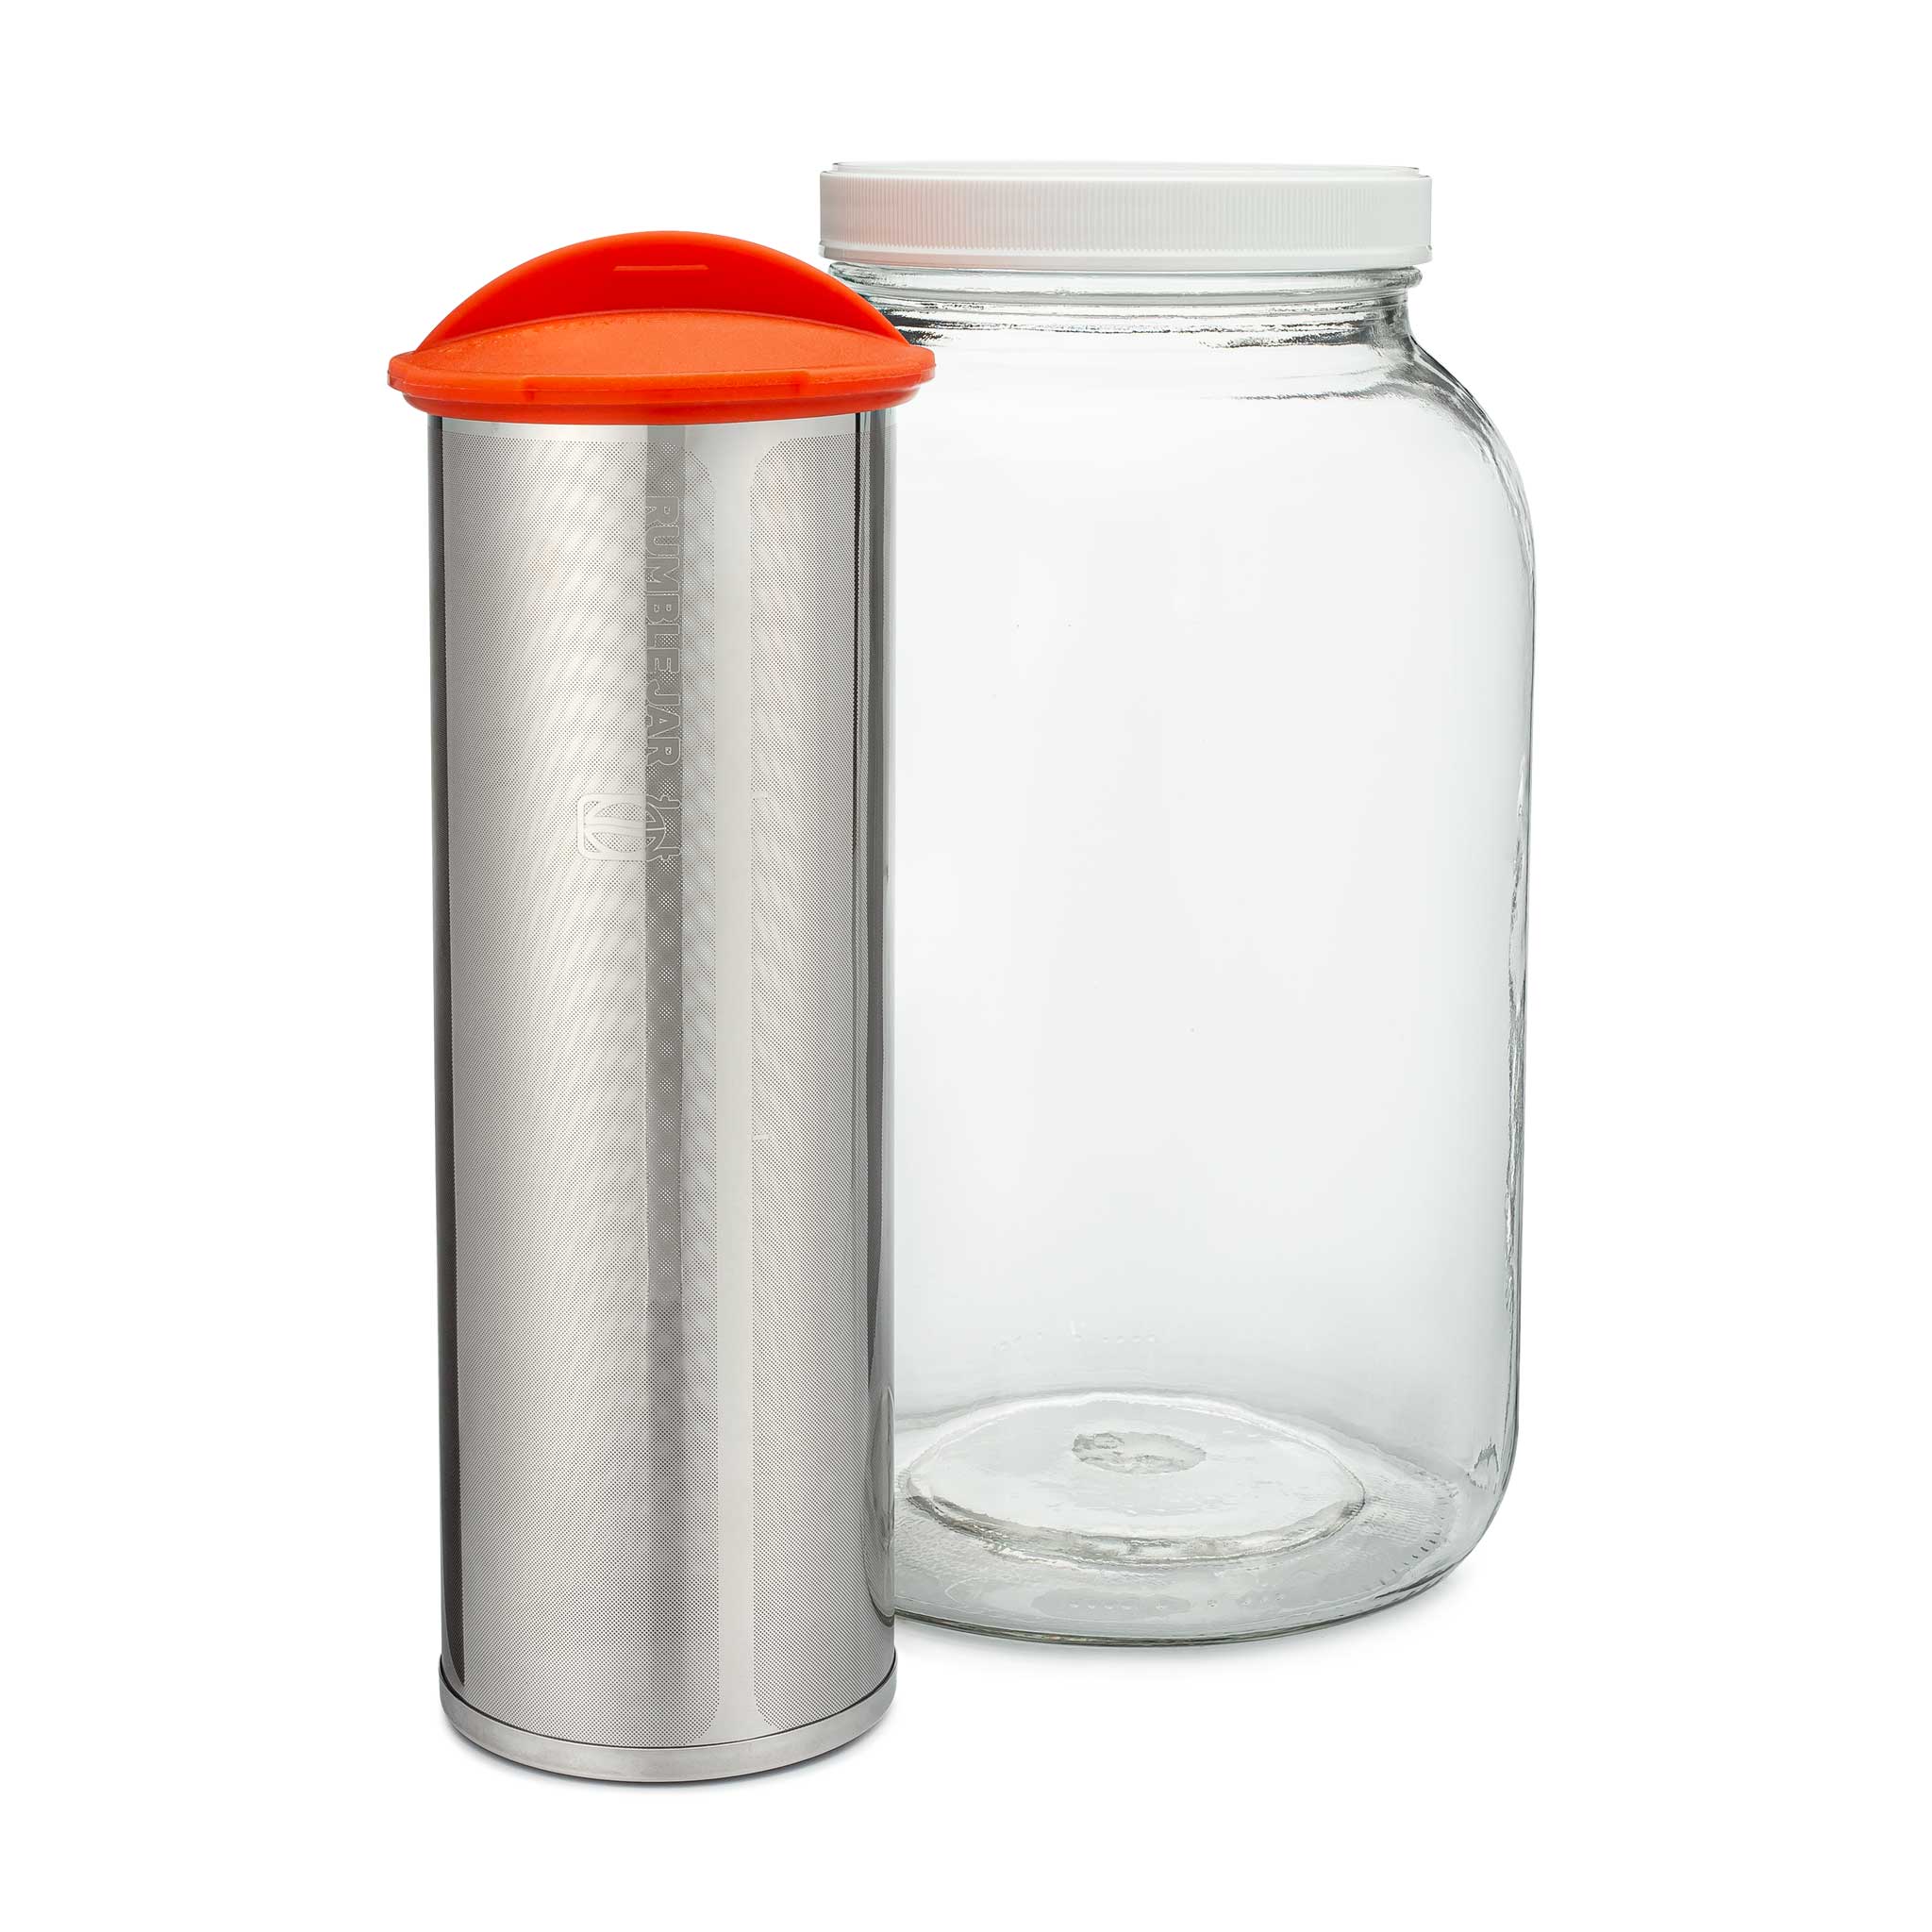 Rumble Jar: Quart size, includes Mason jar – Rockwood Coffee Co.